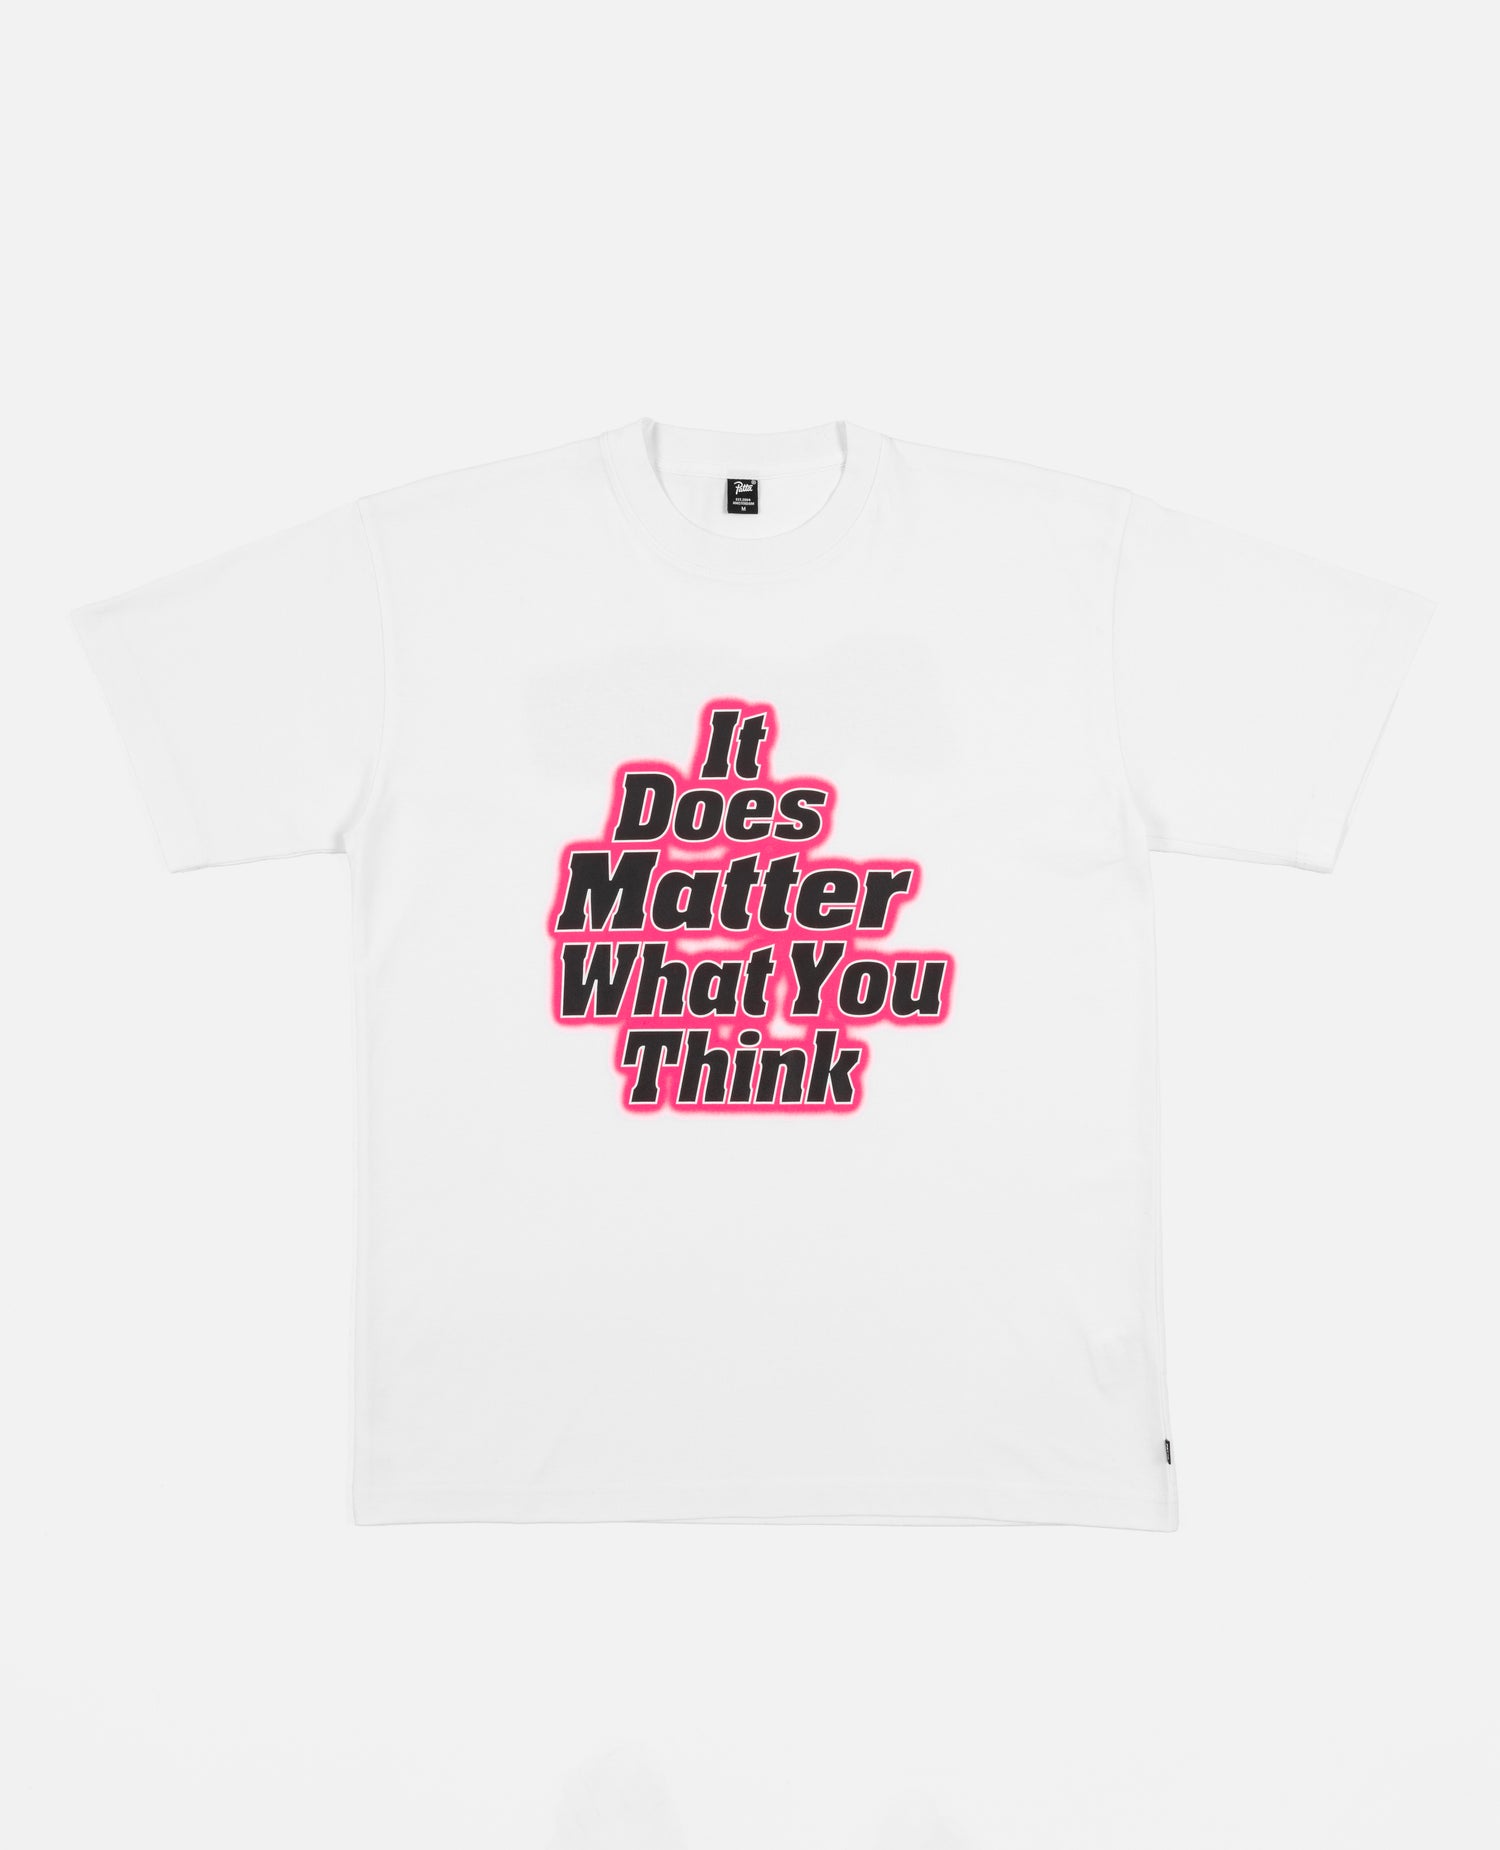 T-shirt Patta, importa cosa pensi (bianco)